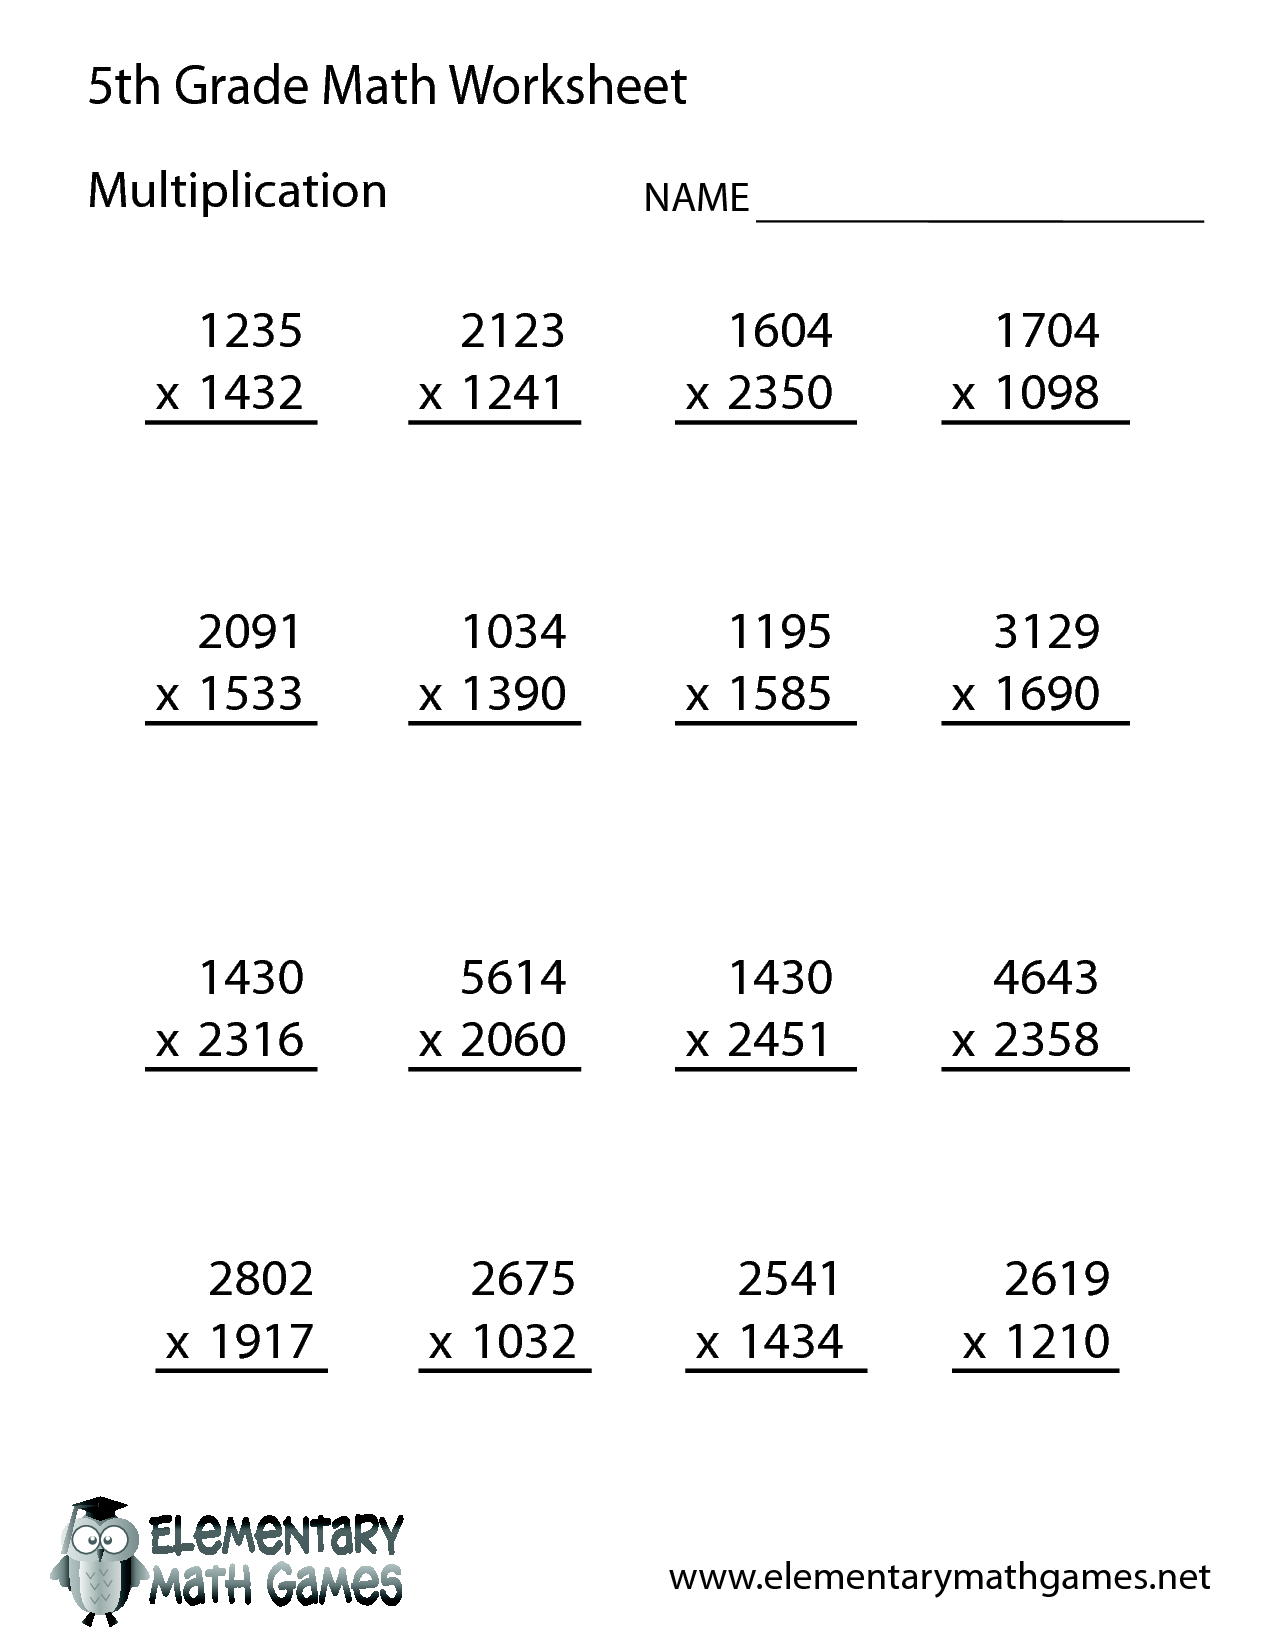 5th Grade Math Worksheets Multiplication Image